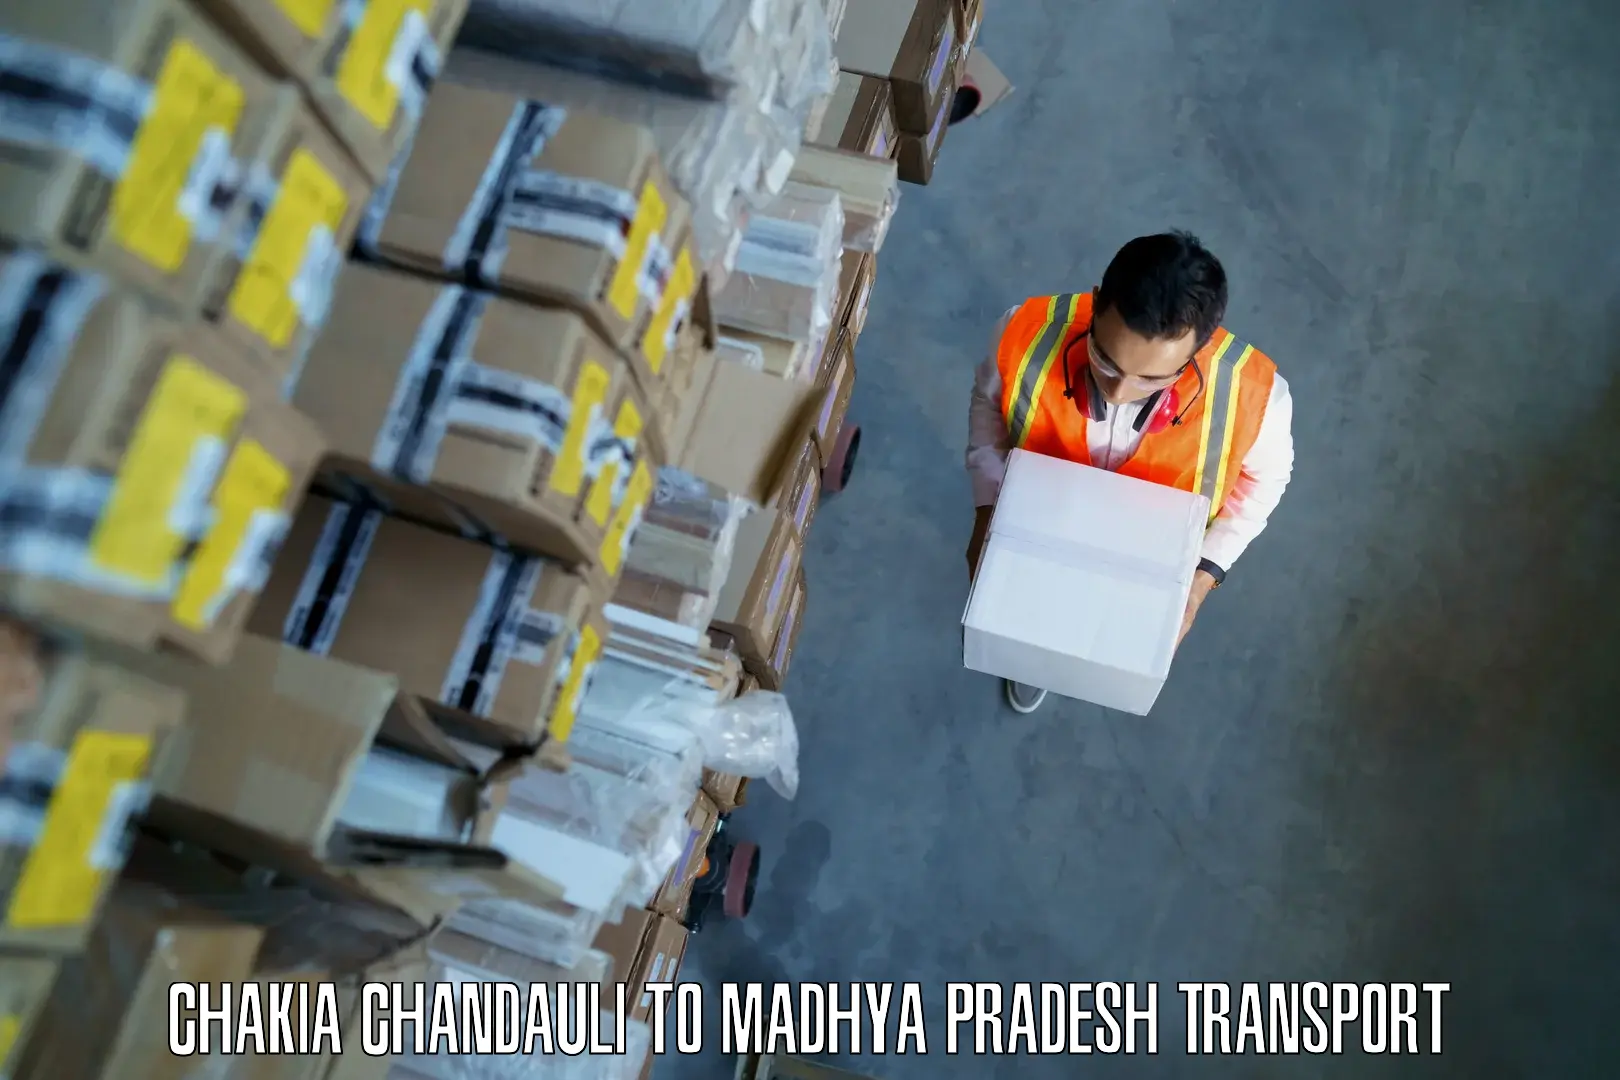 Transport shared services Chakia Chandauli to Amarwara